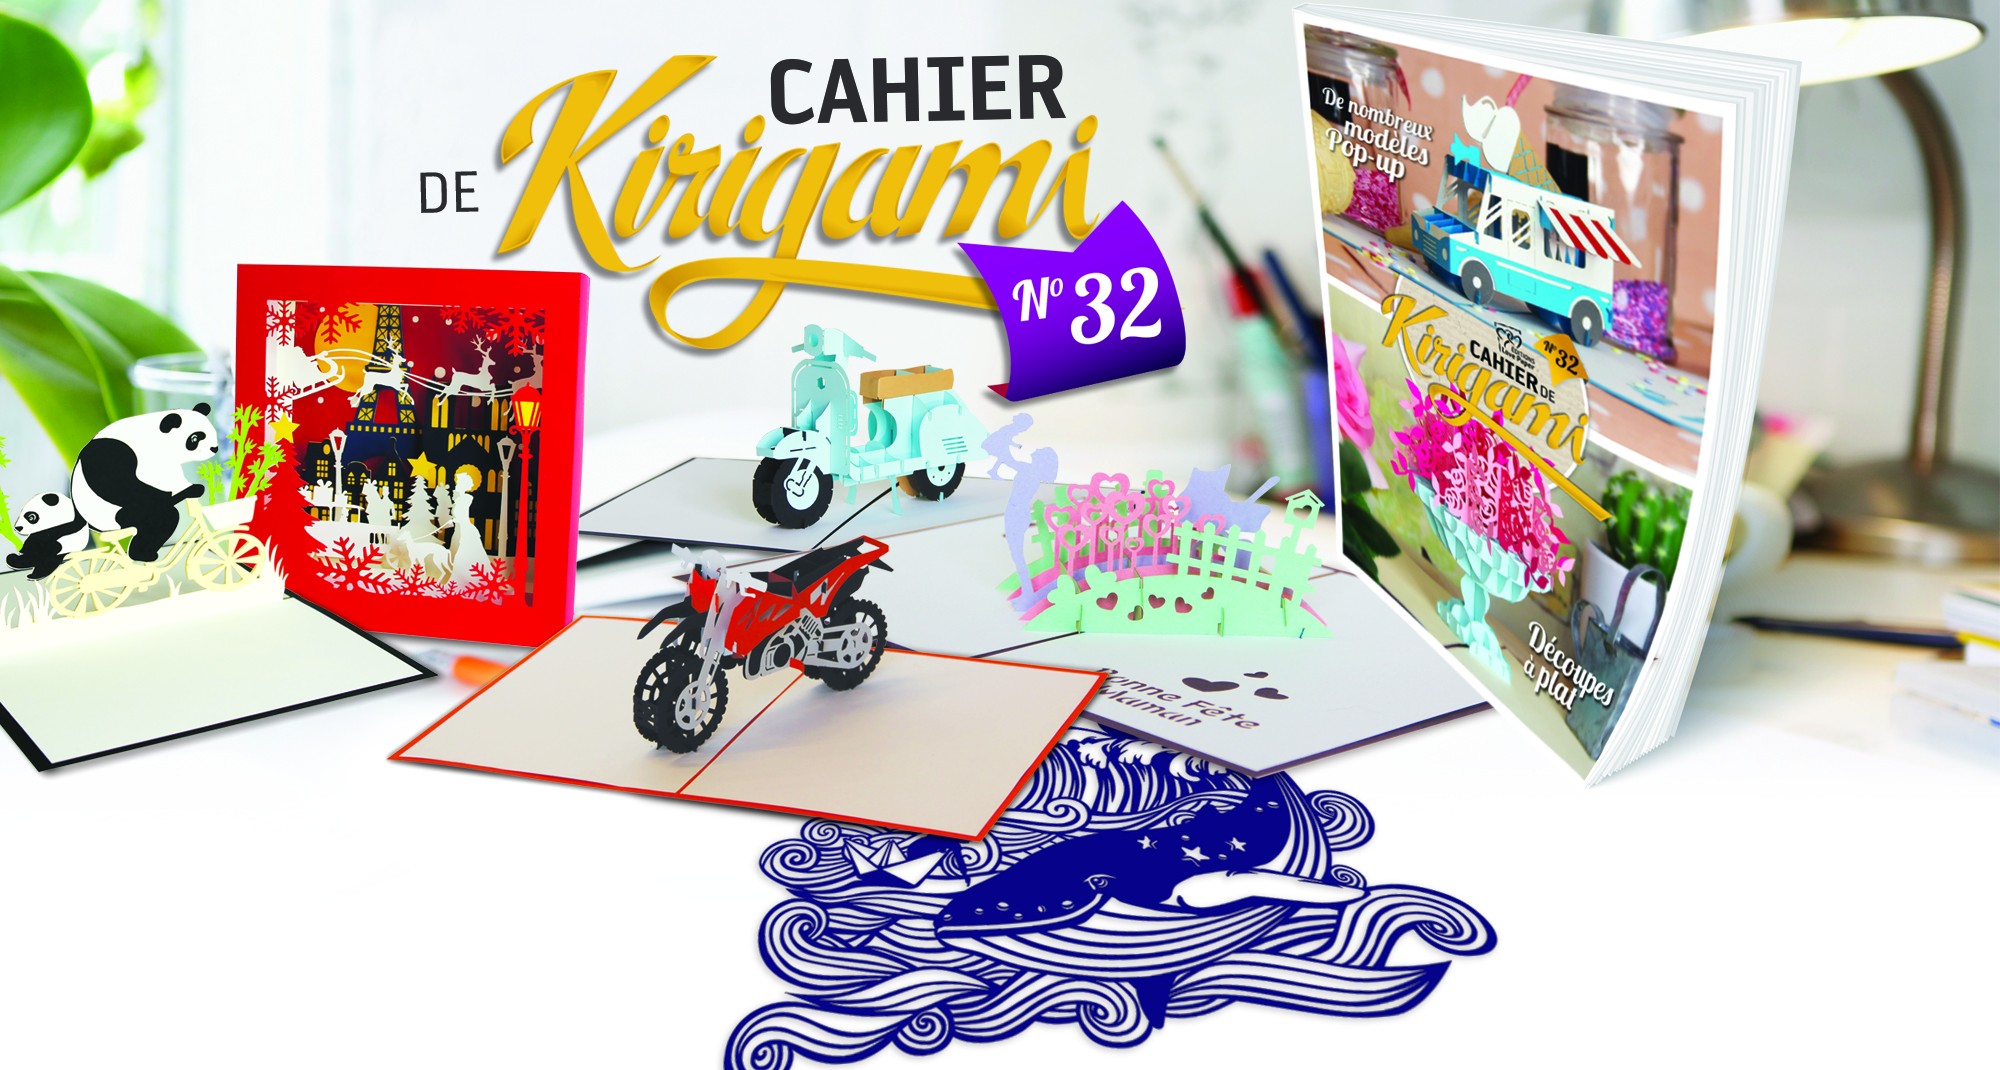 Cahier de Kirigami 32 DIY LOISIR CREATIF Kirigami papier découpe